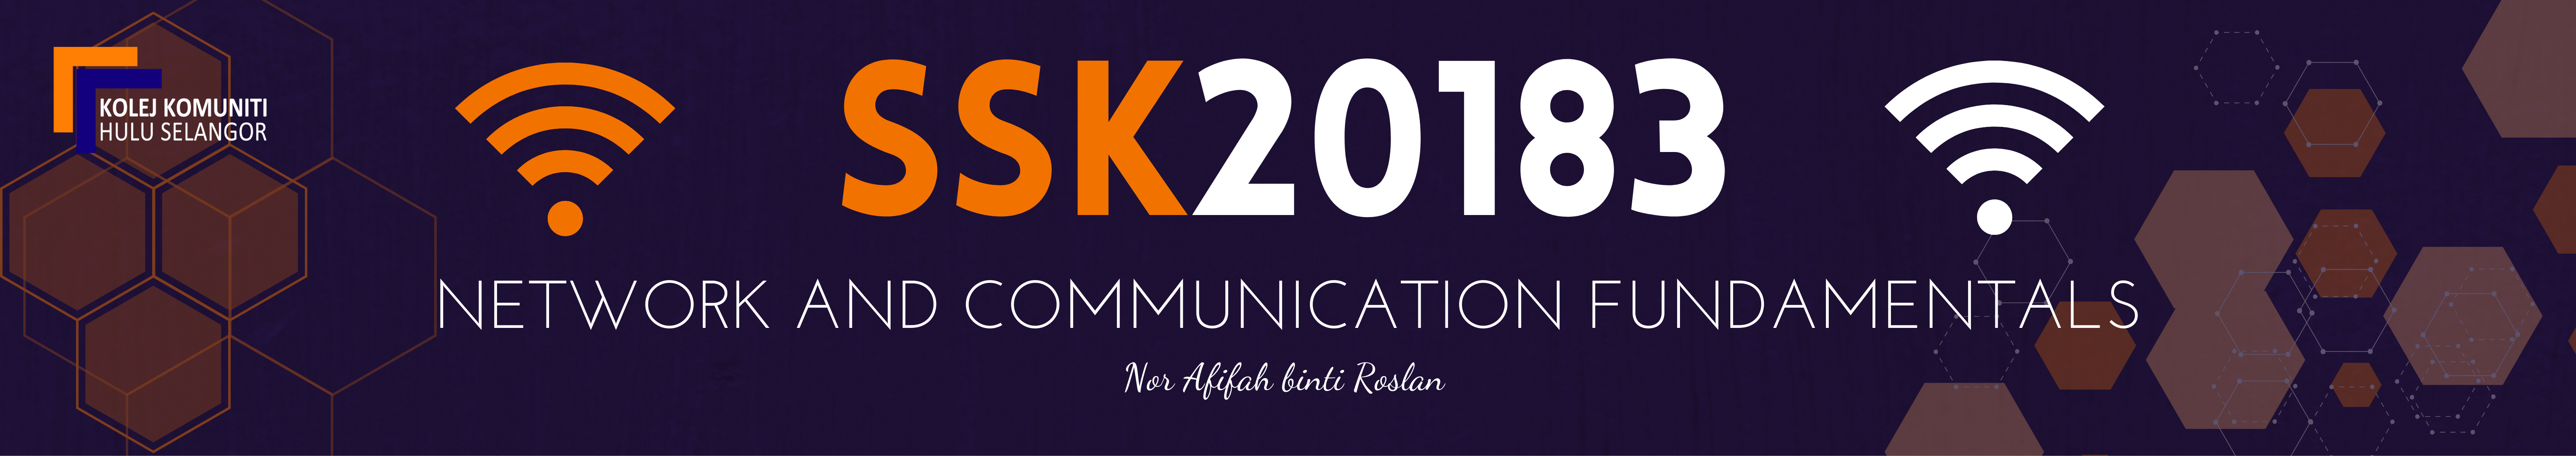 KKHS | SSK20183 NETWORK AND COMMUNICATION FUNDAMENTALS